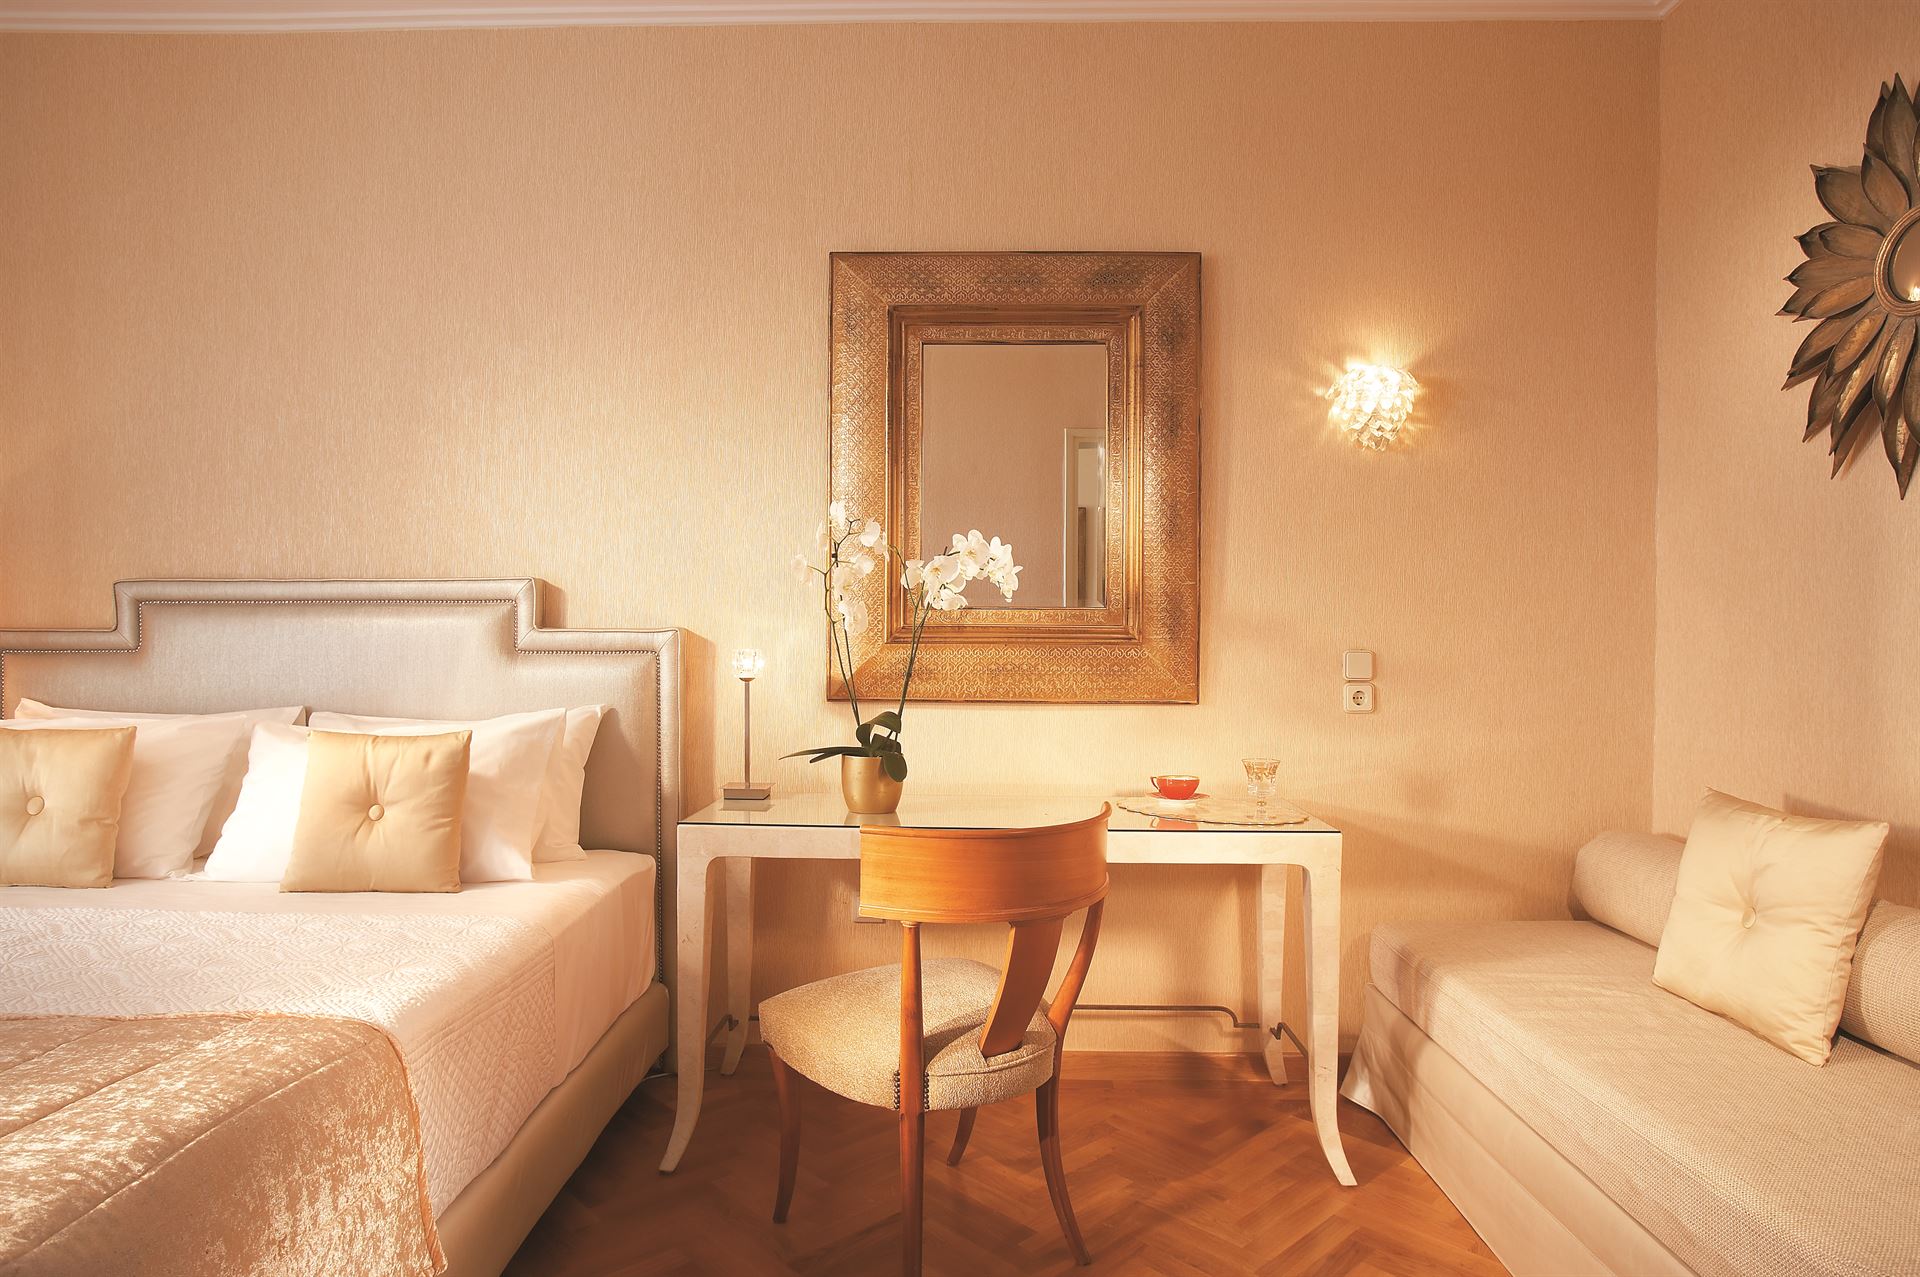 Grecotel Creta Palace Luxury Resort: Double Room